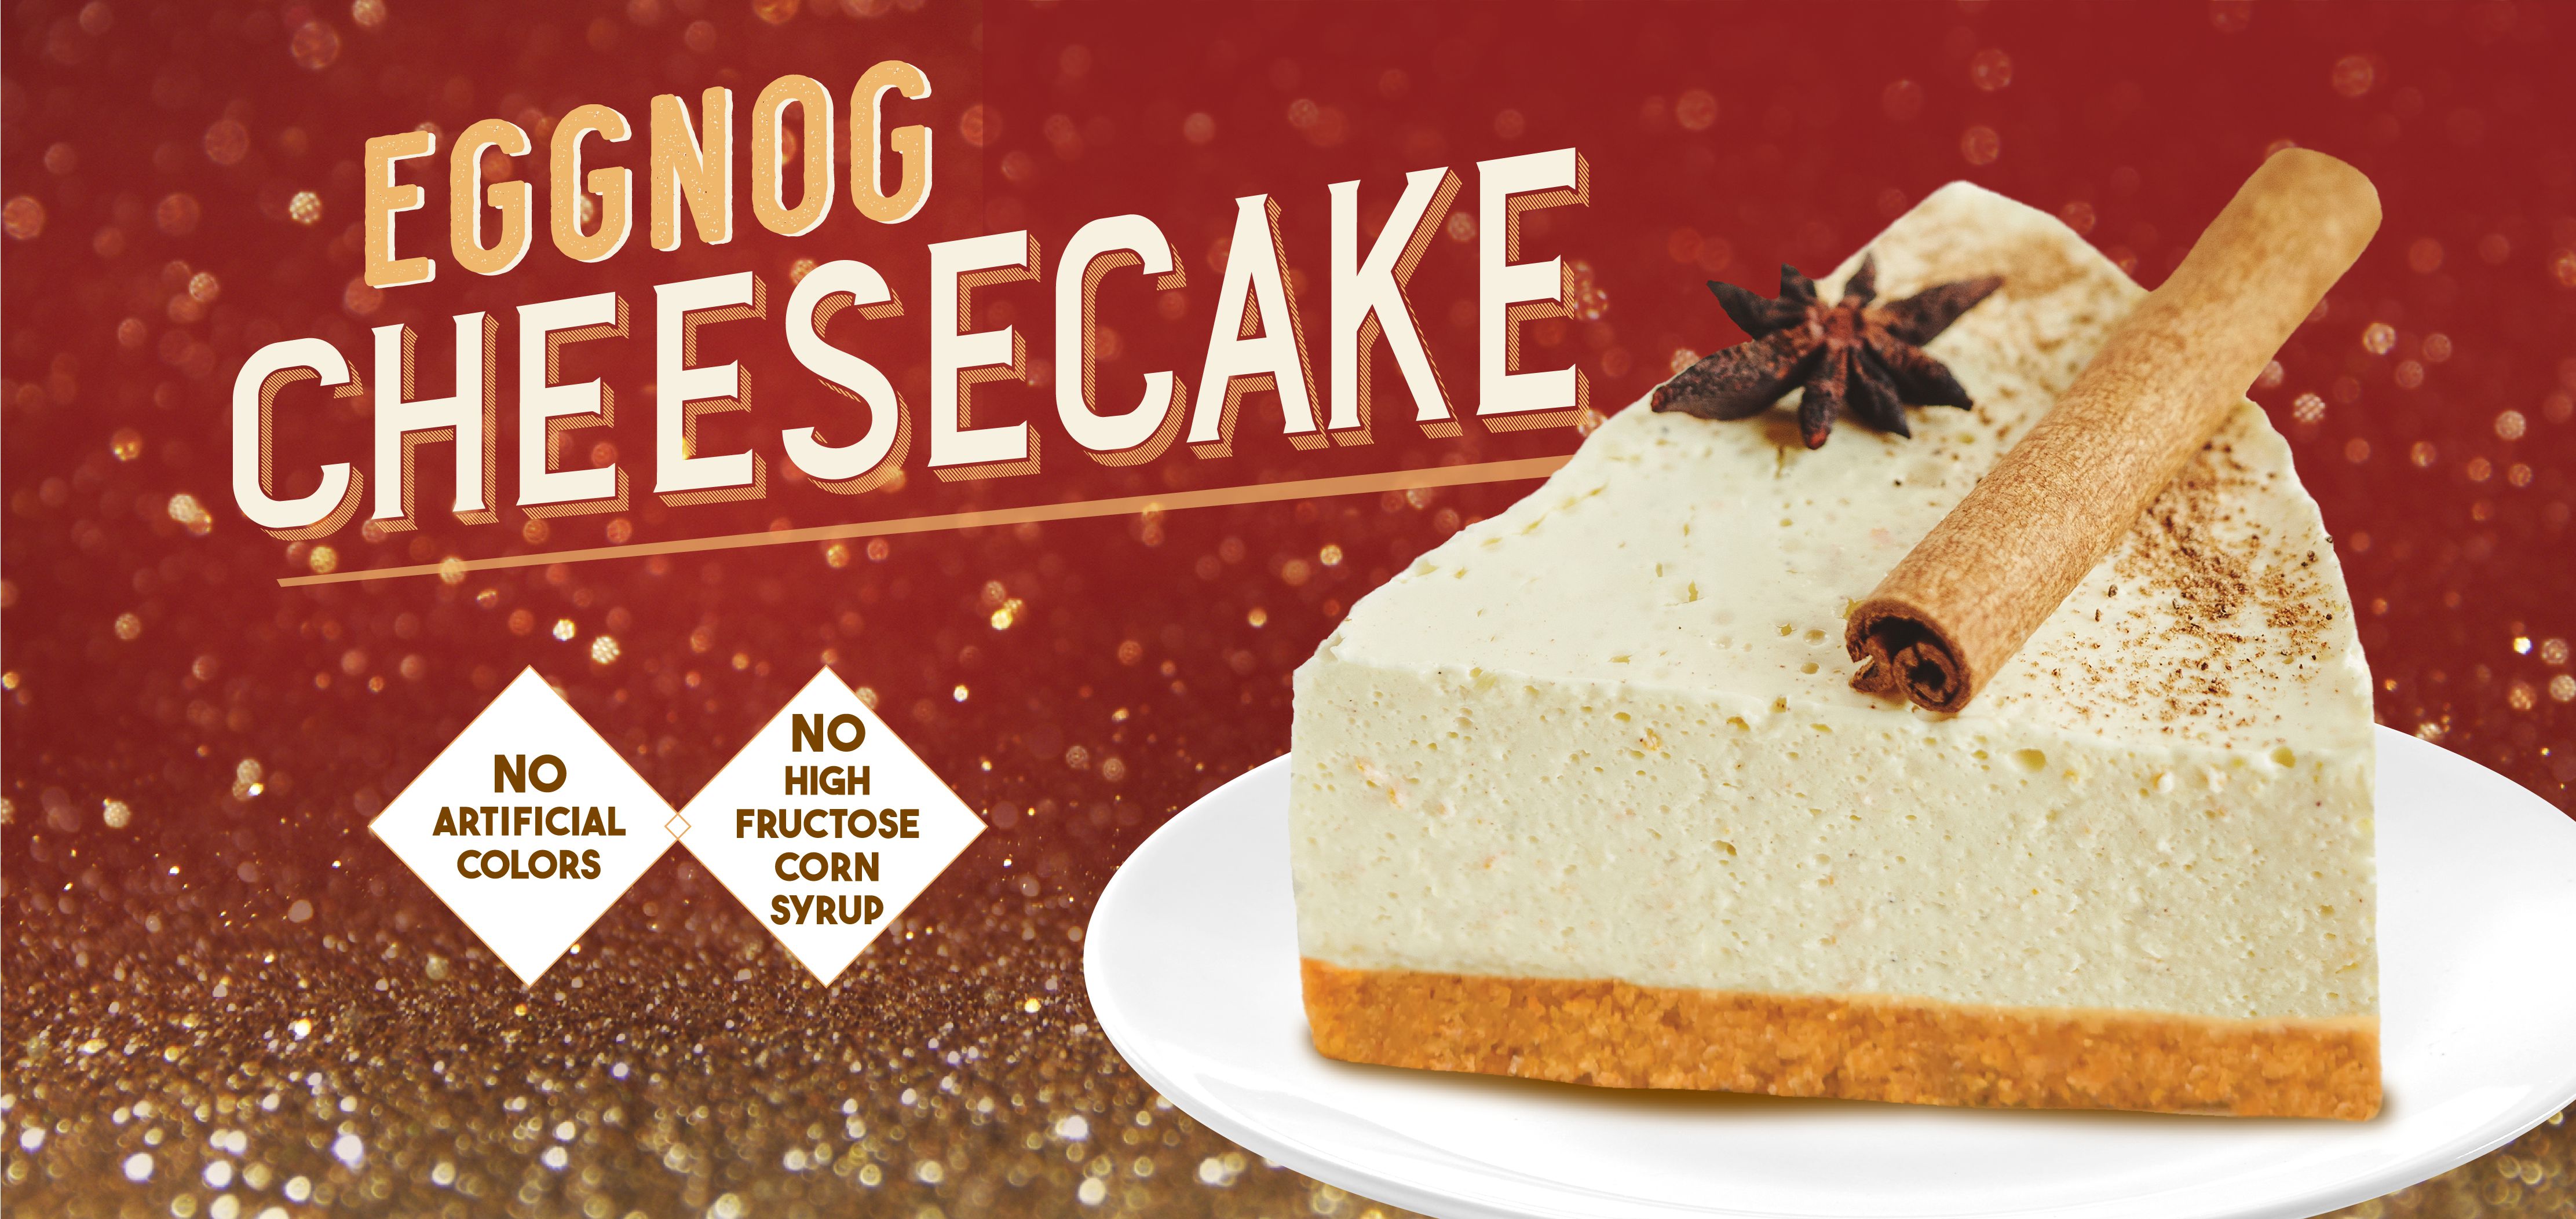 eggnog cheesecake label image